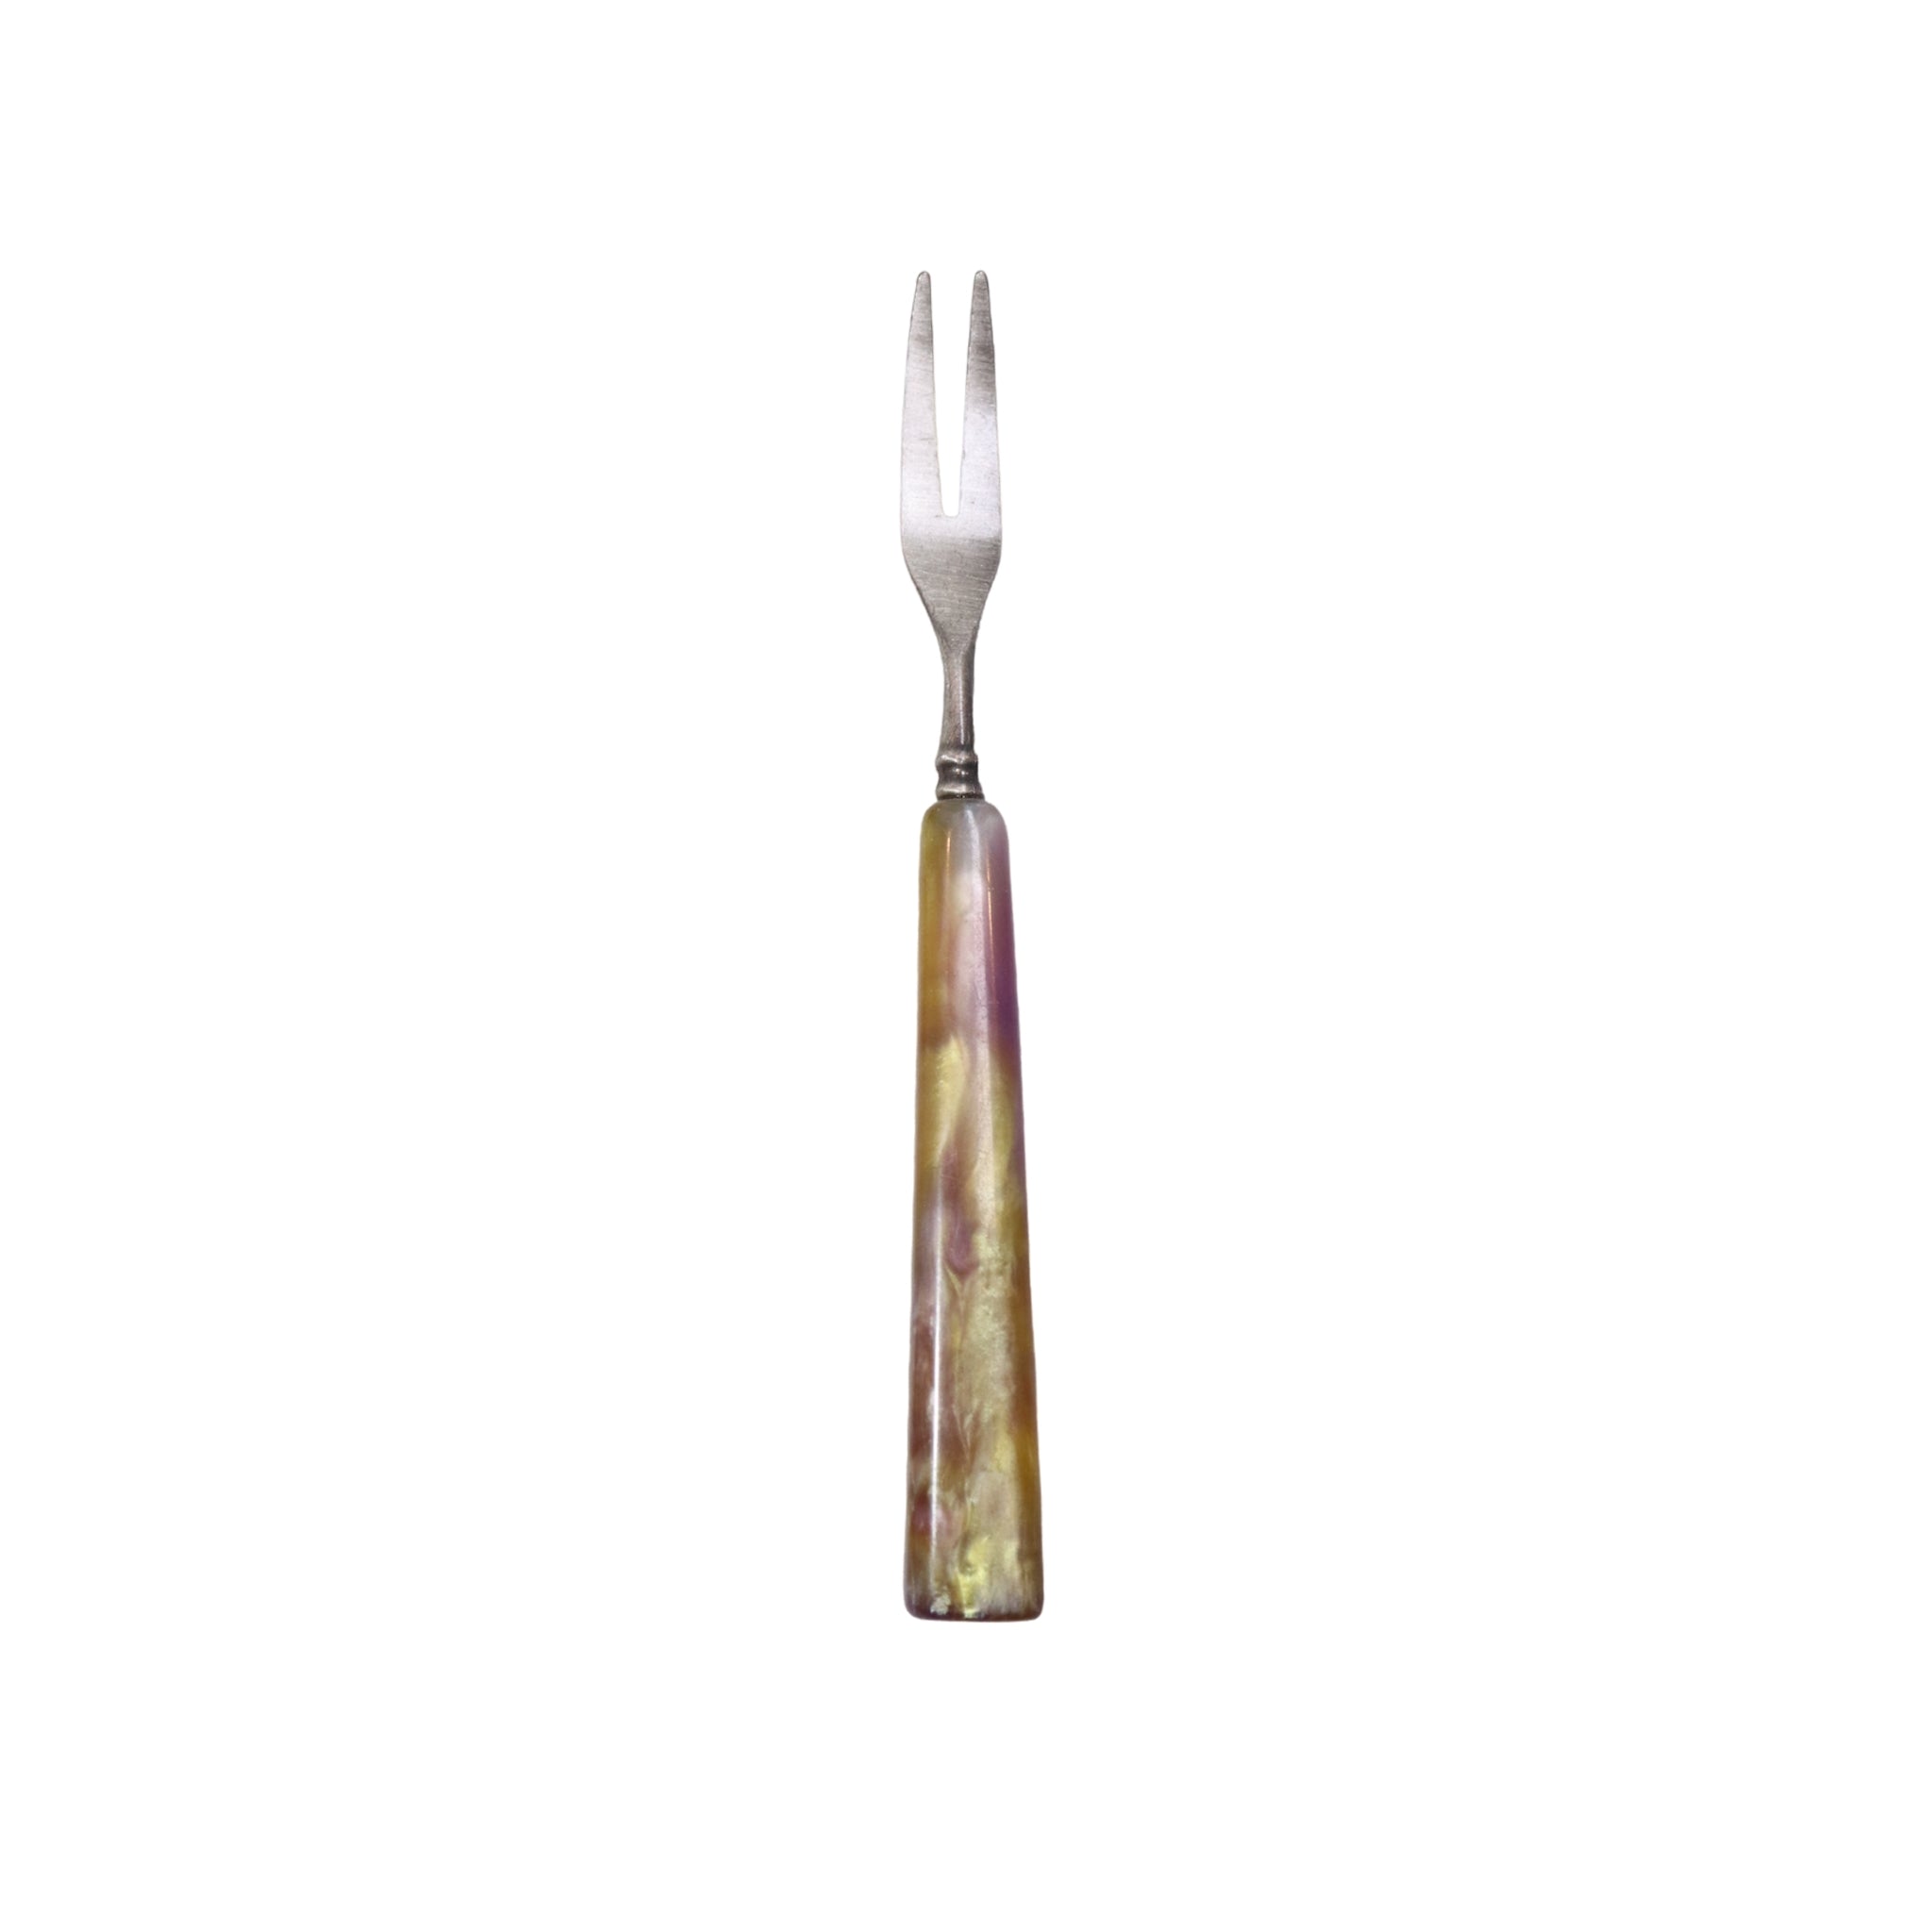 CH Resin Hookah Forks - Resin Finish - Silver - Crown Hookah